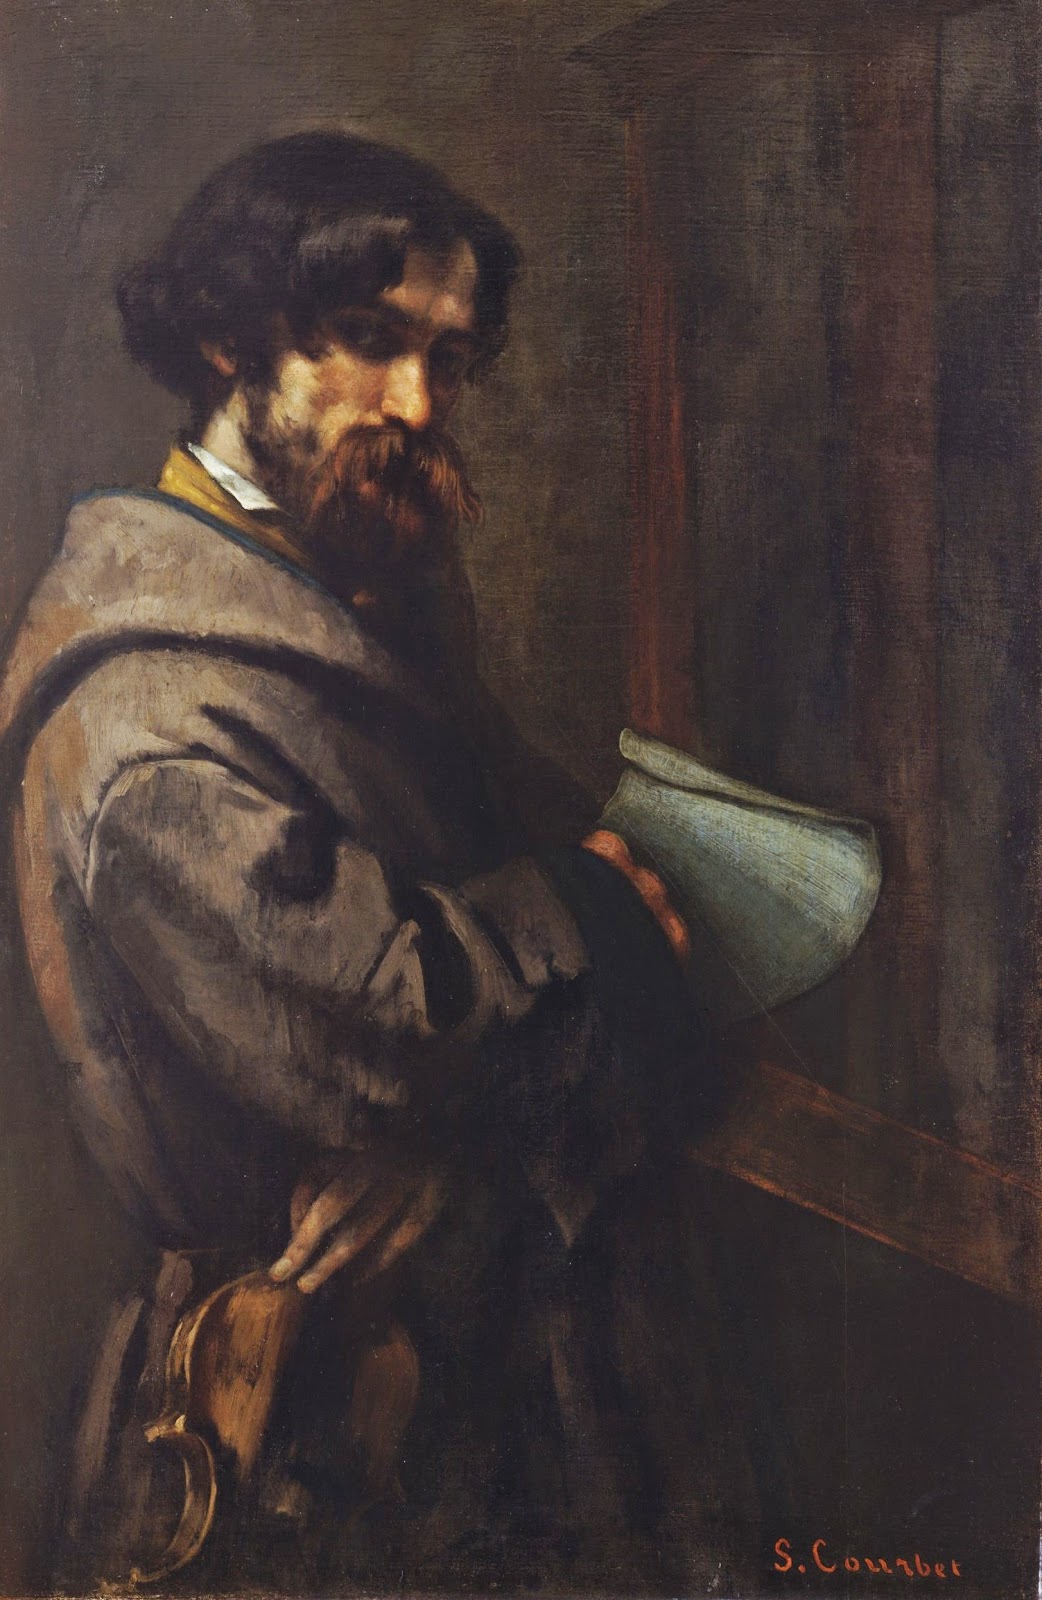 Gustave+Courbet-1819-1877 (49).jpg